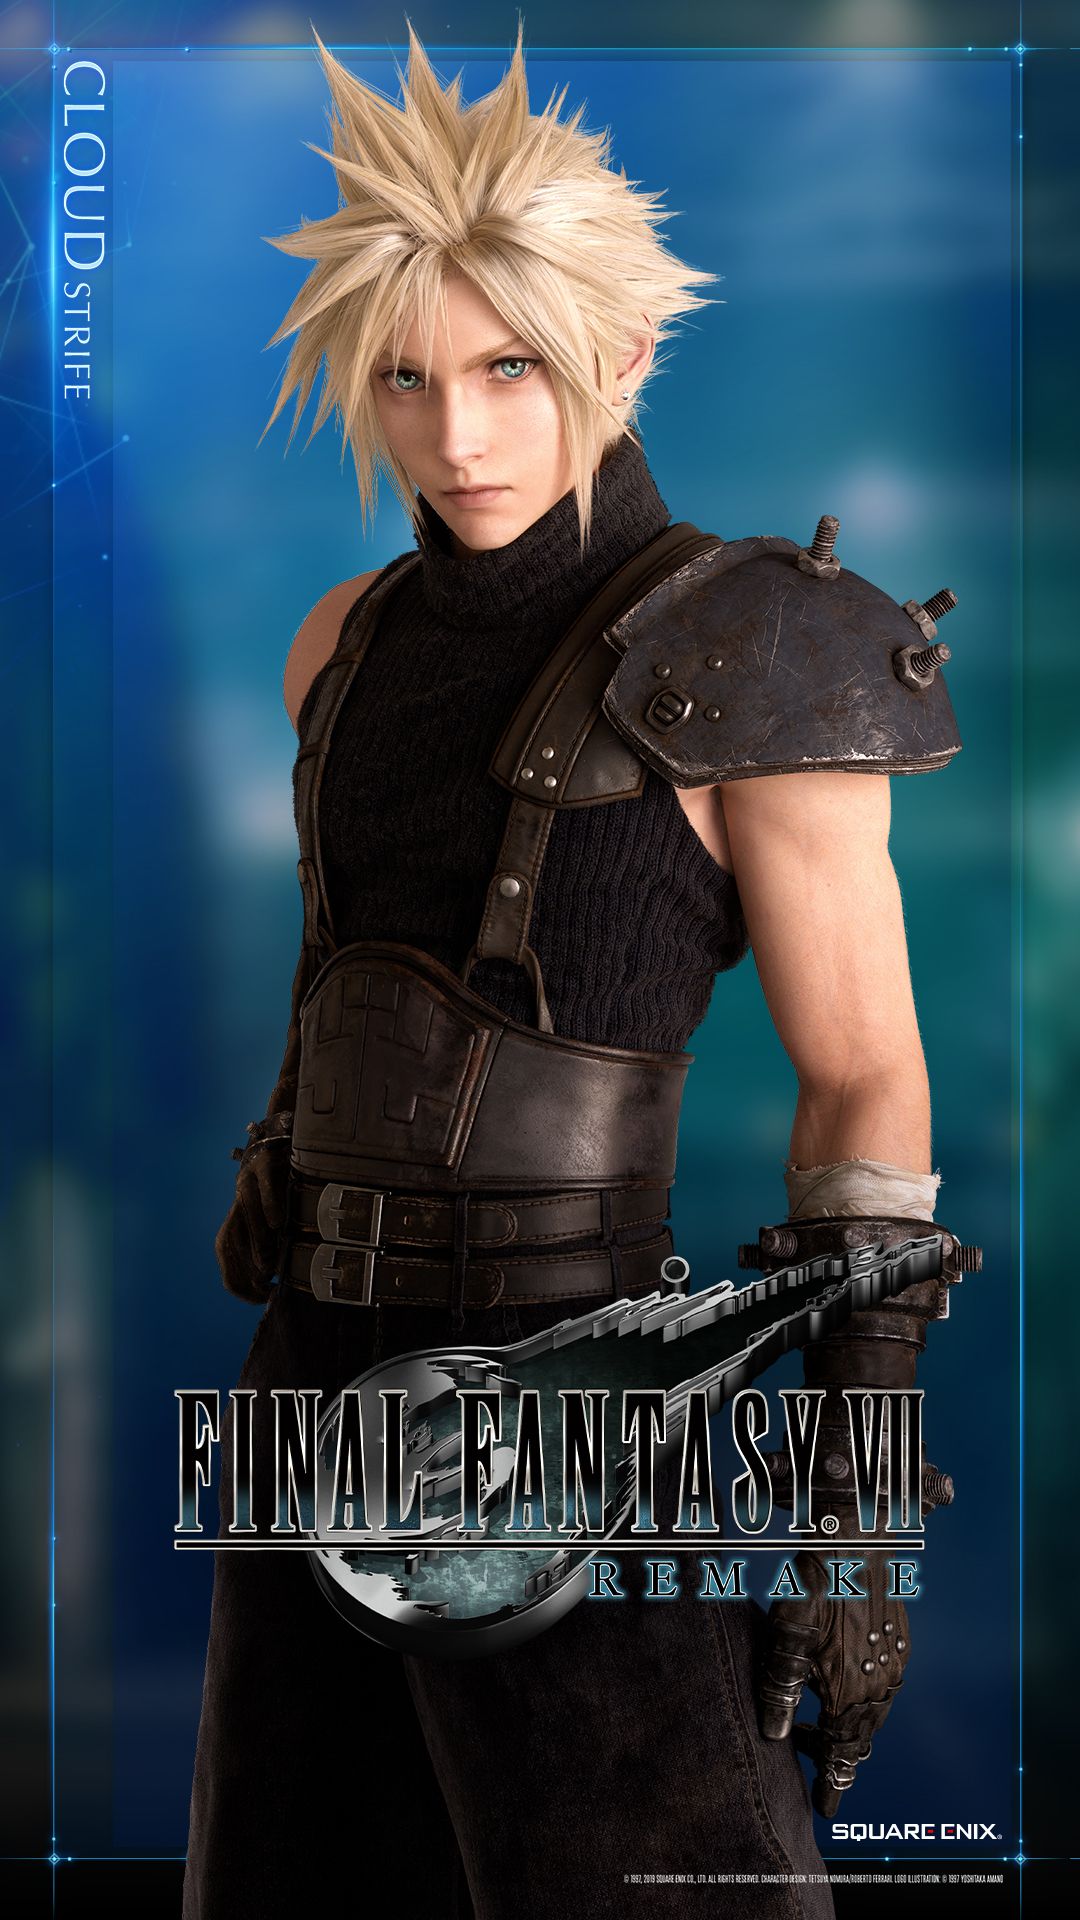 Final Fantasy VII Remake Gets Official Wallpaper of Hero Cloud Strife